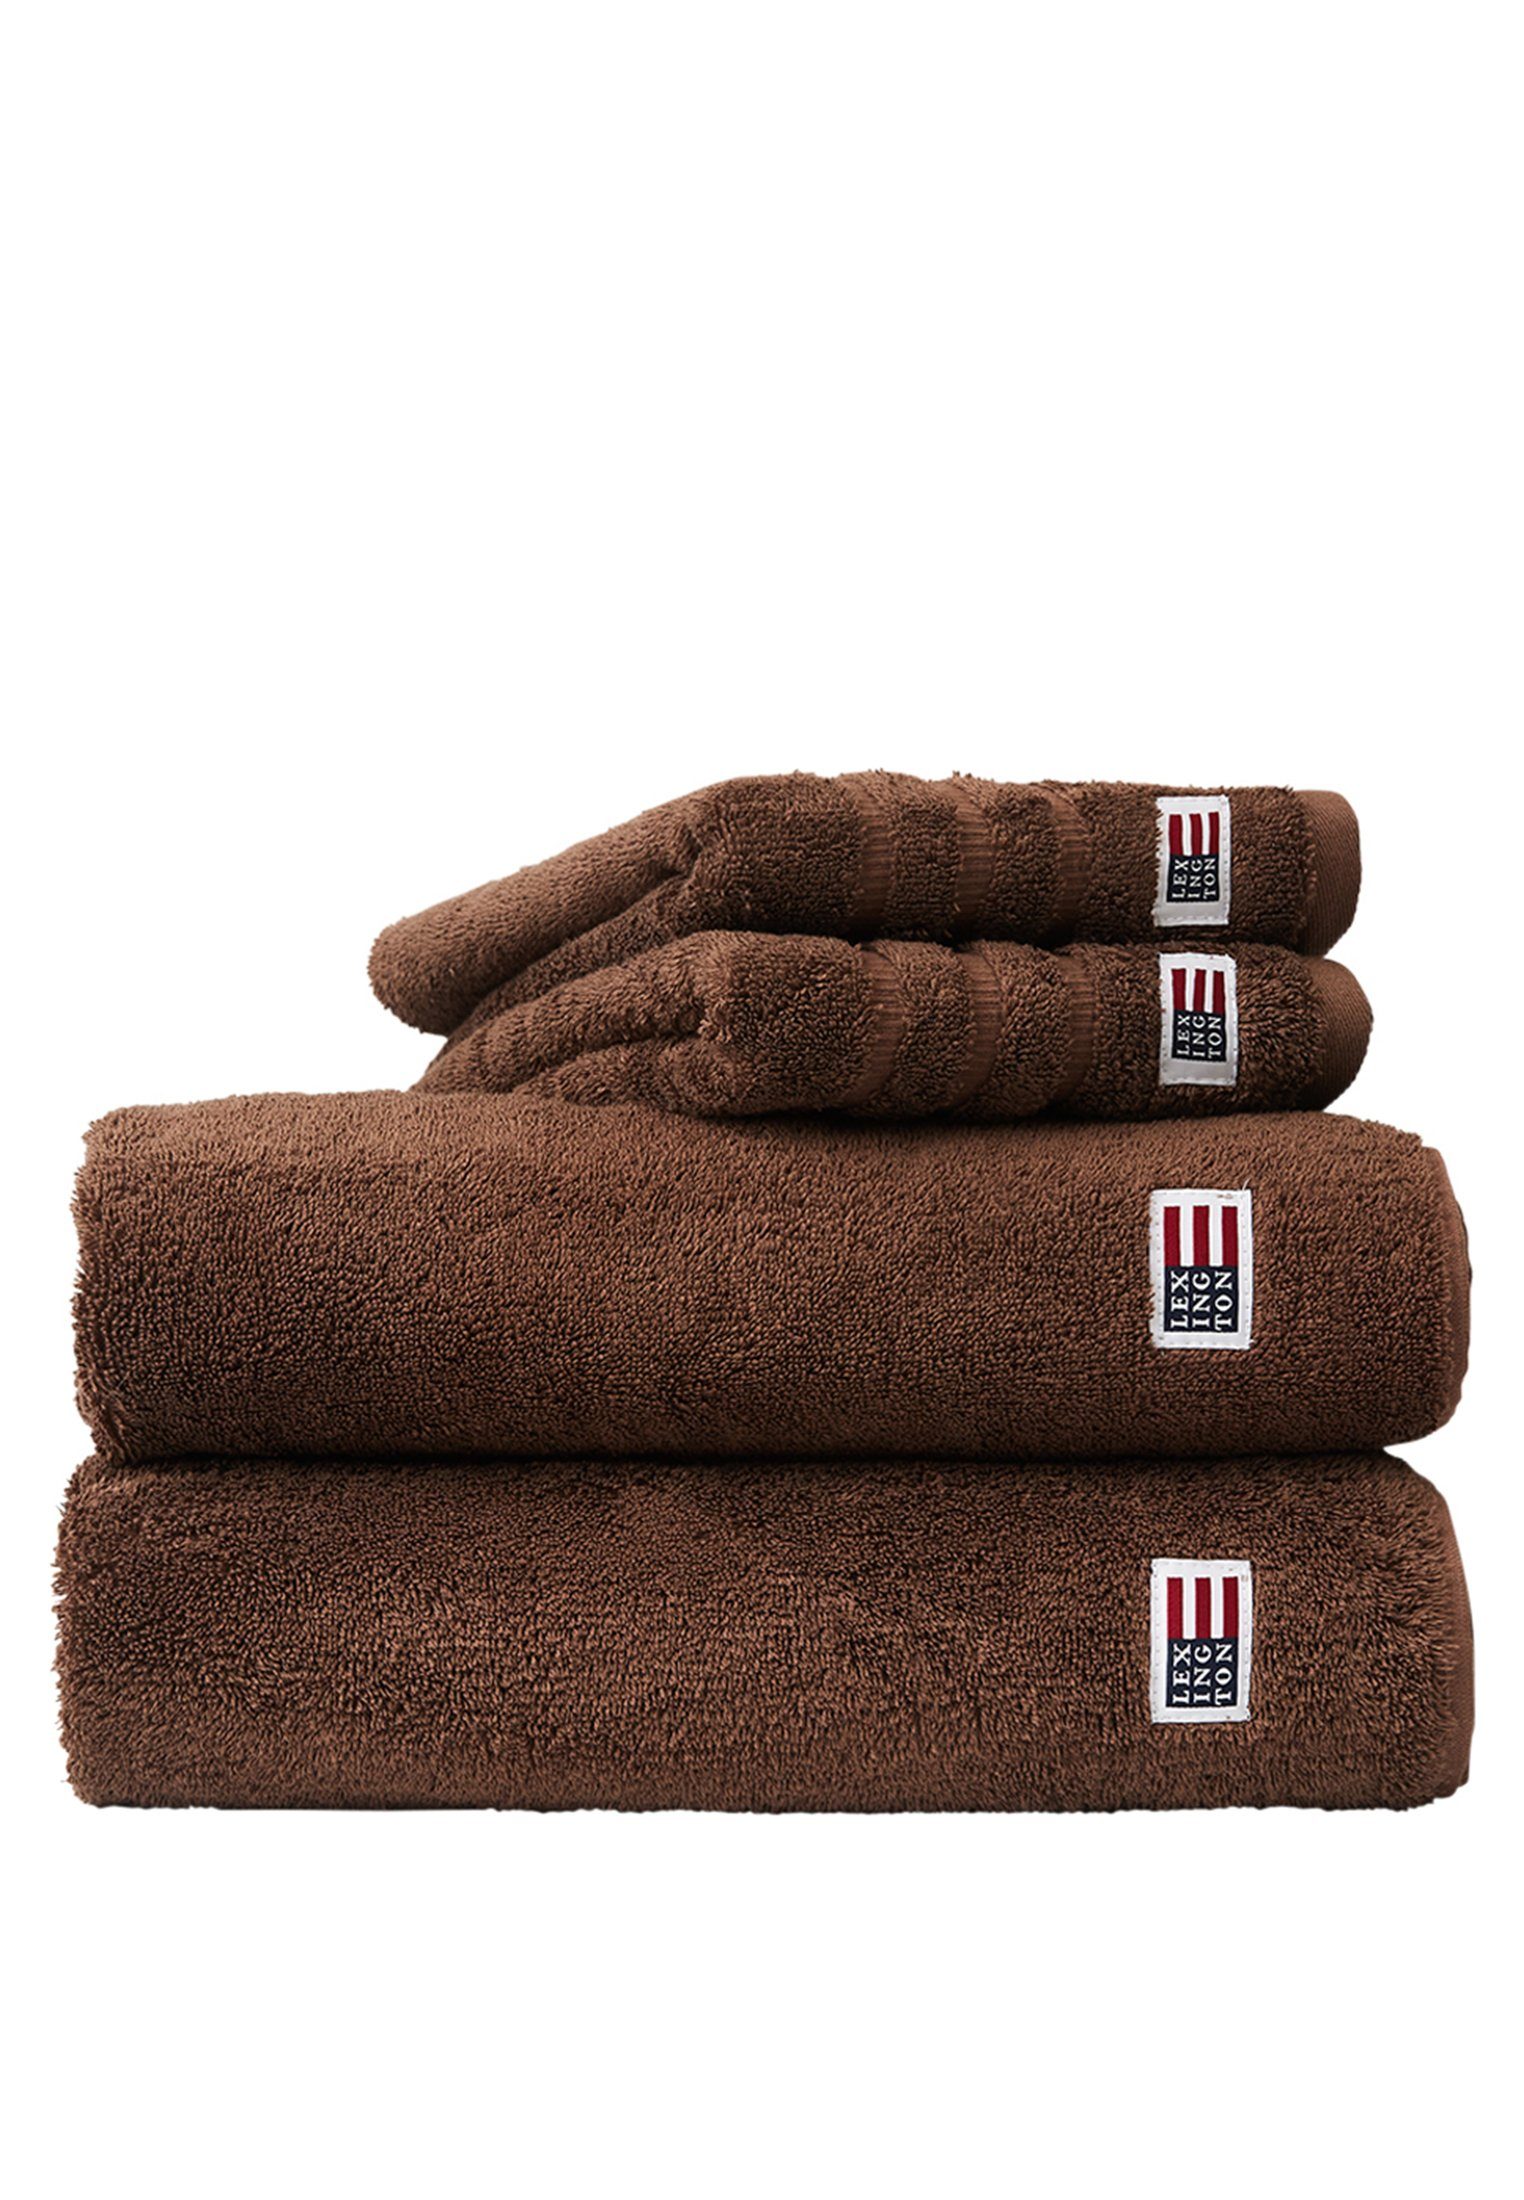 Lexington Handtuch Original Towel hazel brown | Alle Handtücher